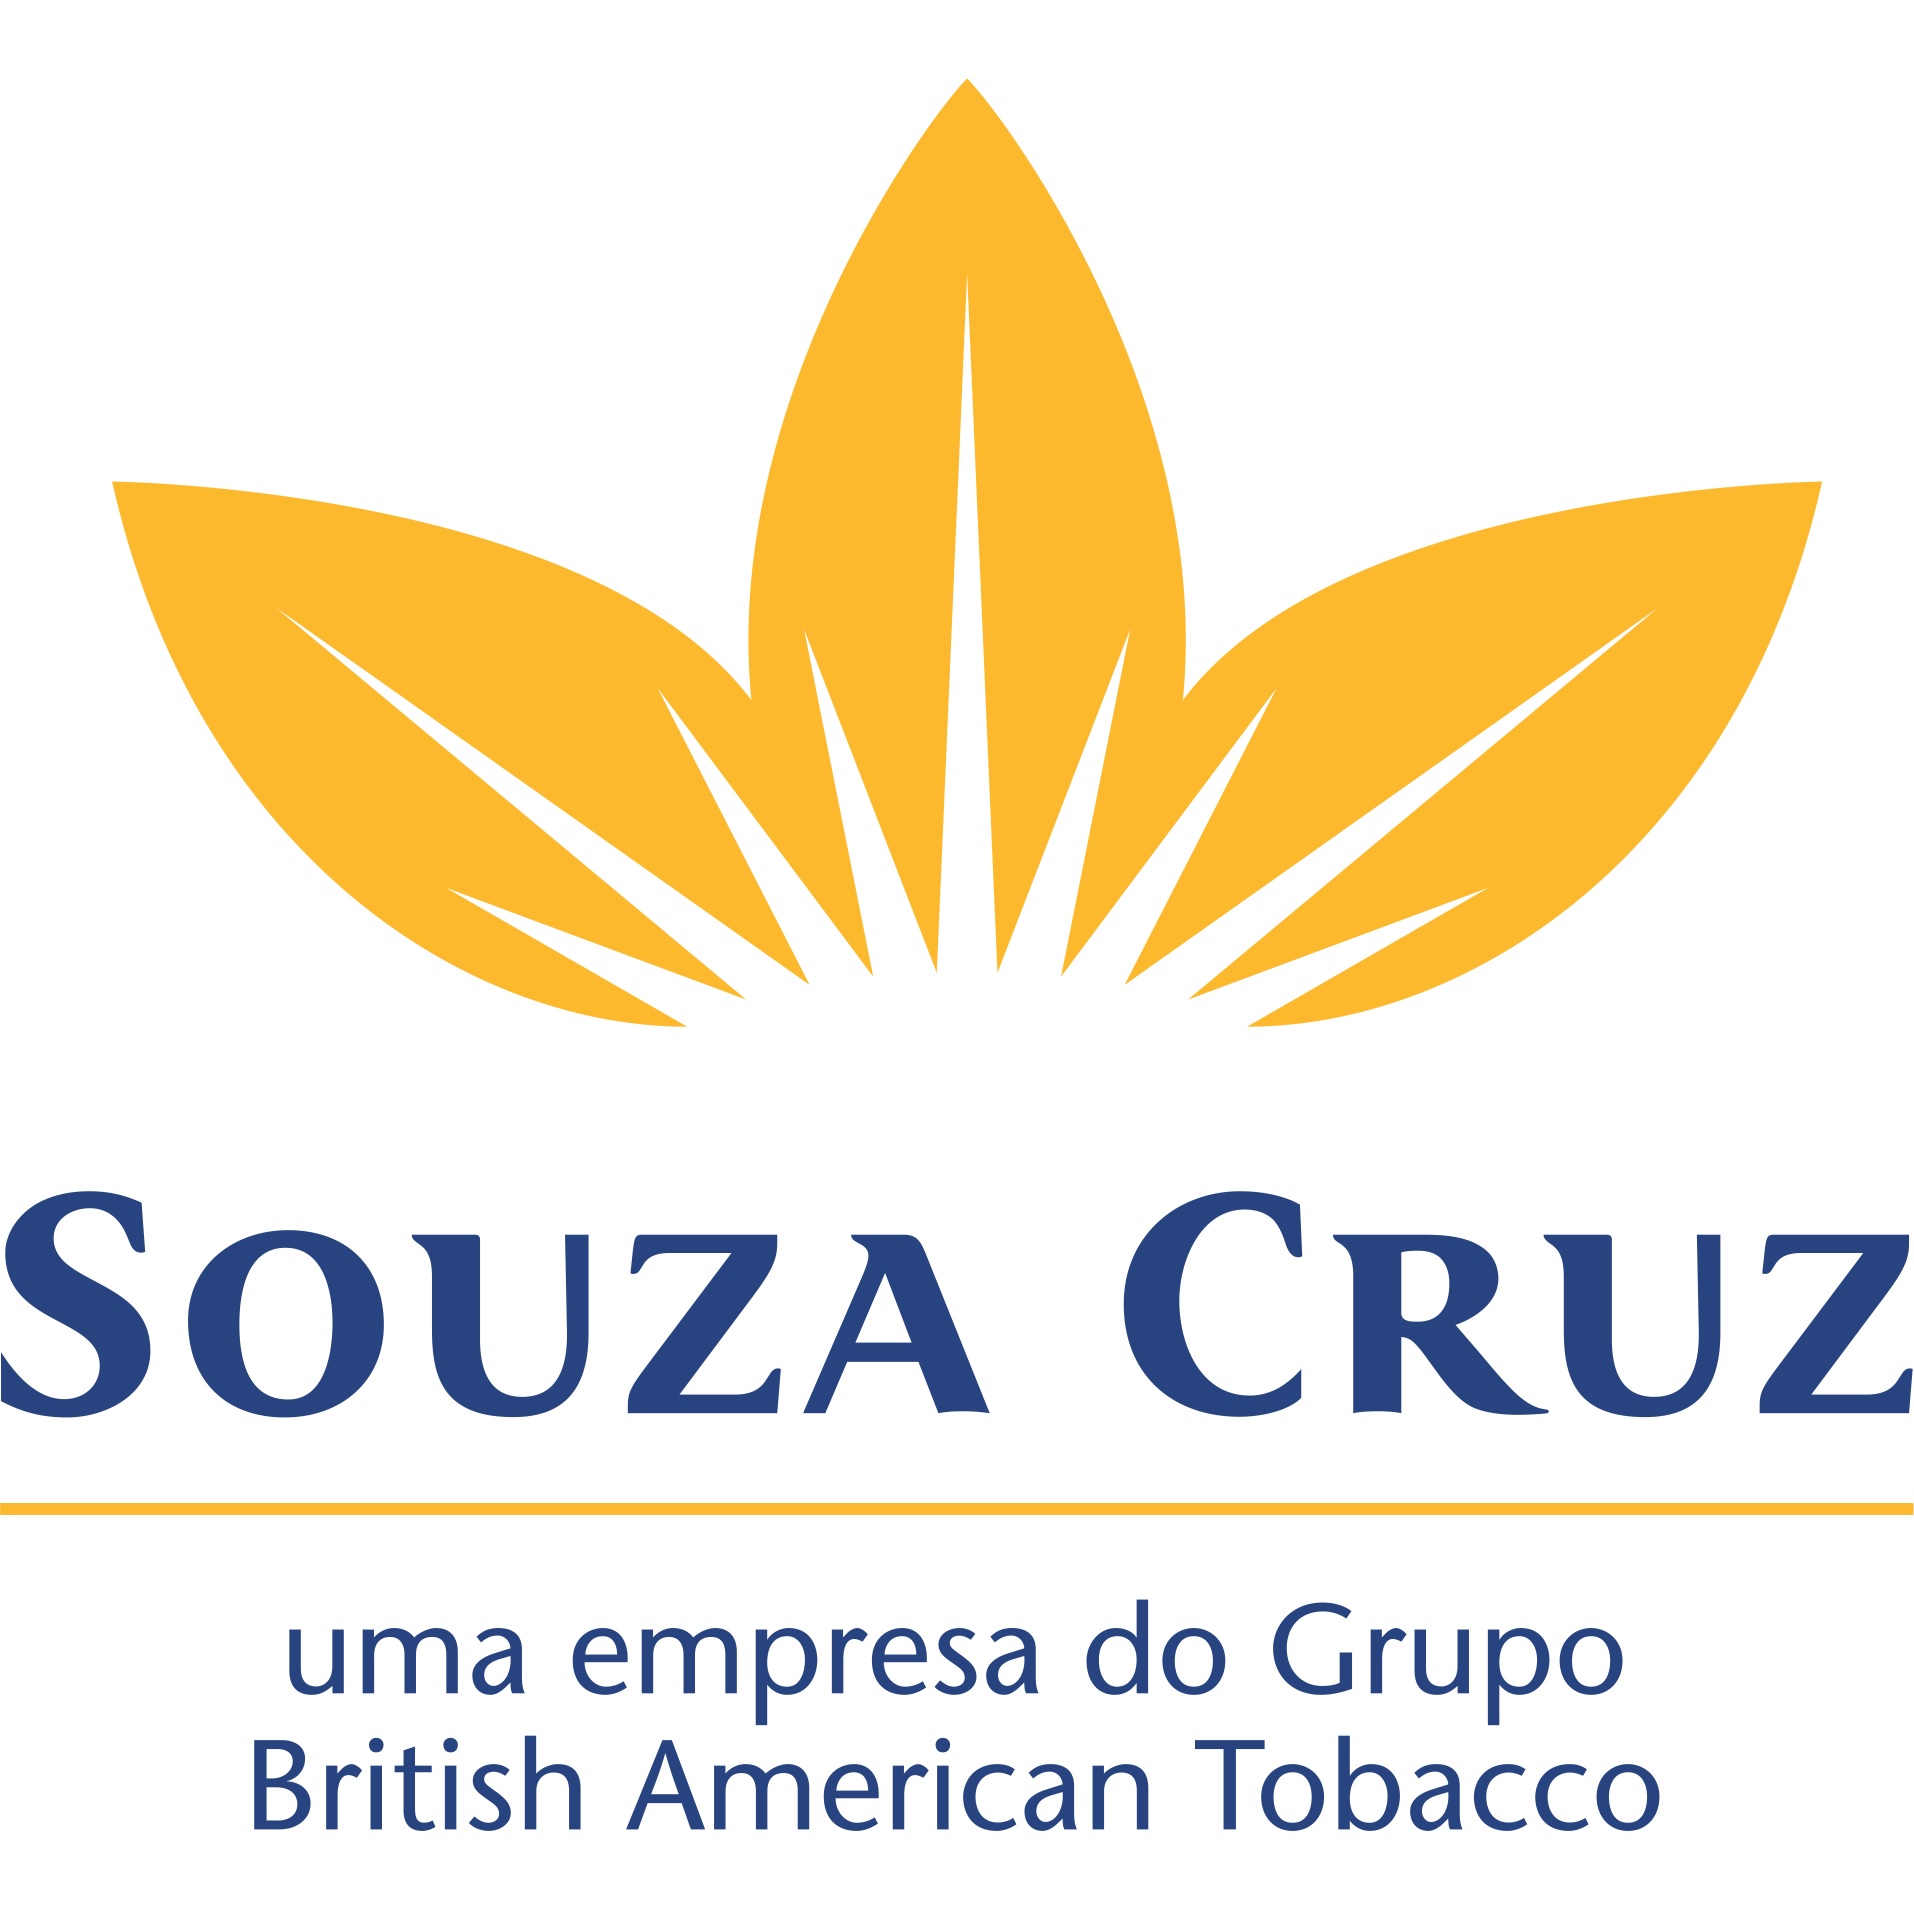 Souza Cruz abre as portas para startups que querem transformar grandes mercados